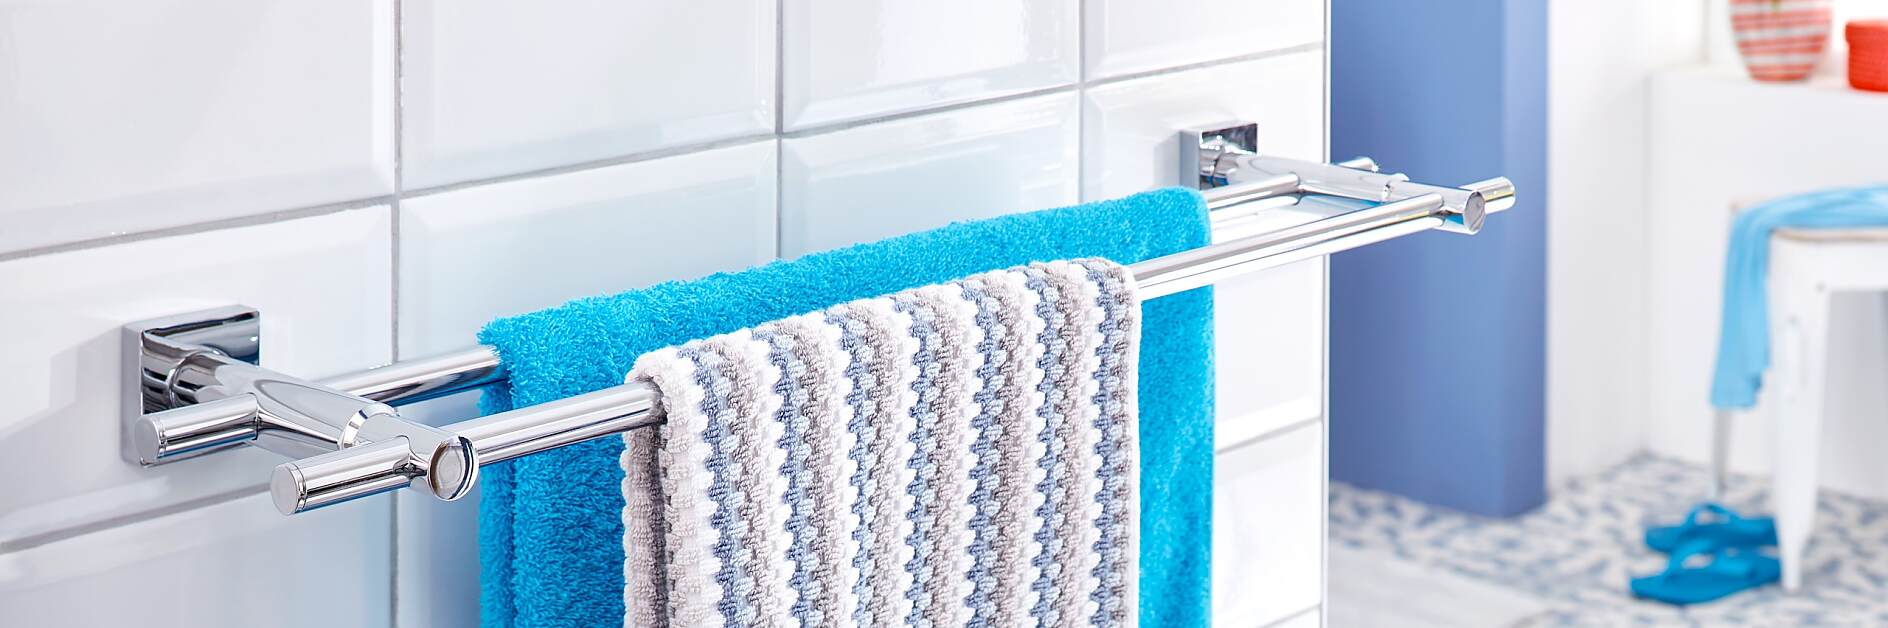 No Drilling Self-Adhesive Bathroom Hardware Towel Bar Rack Holder Gray  Aluminum Double Pole Bar With Hook Bathroom Accessories